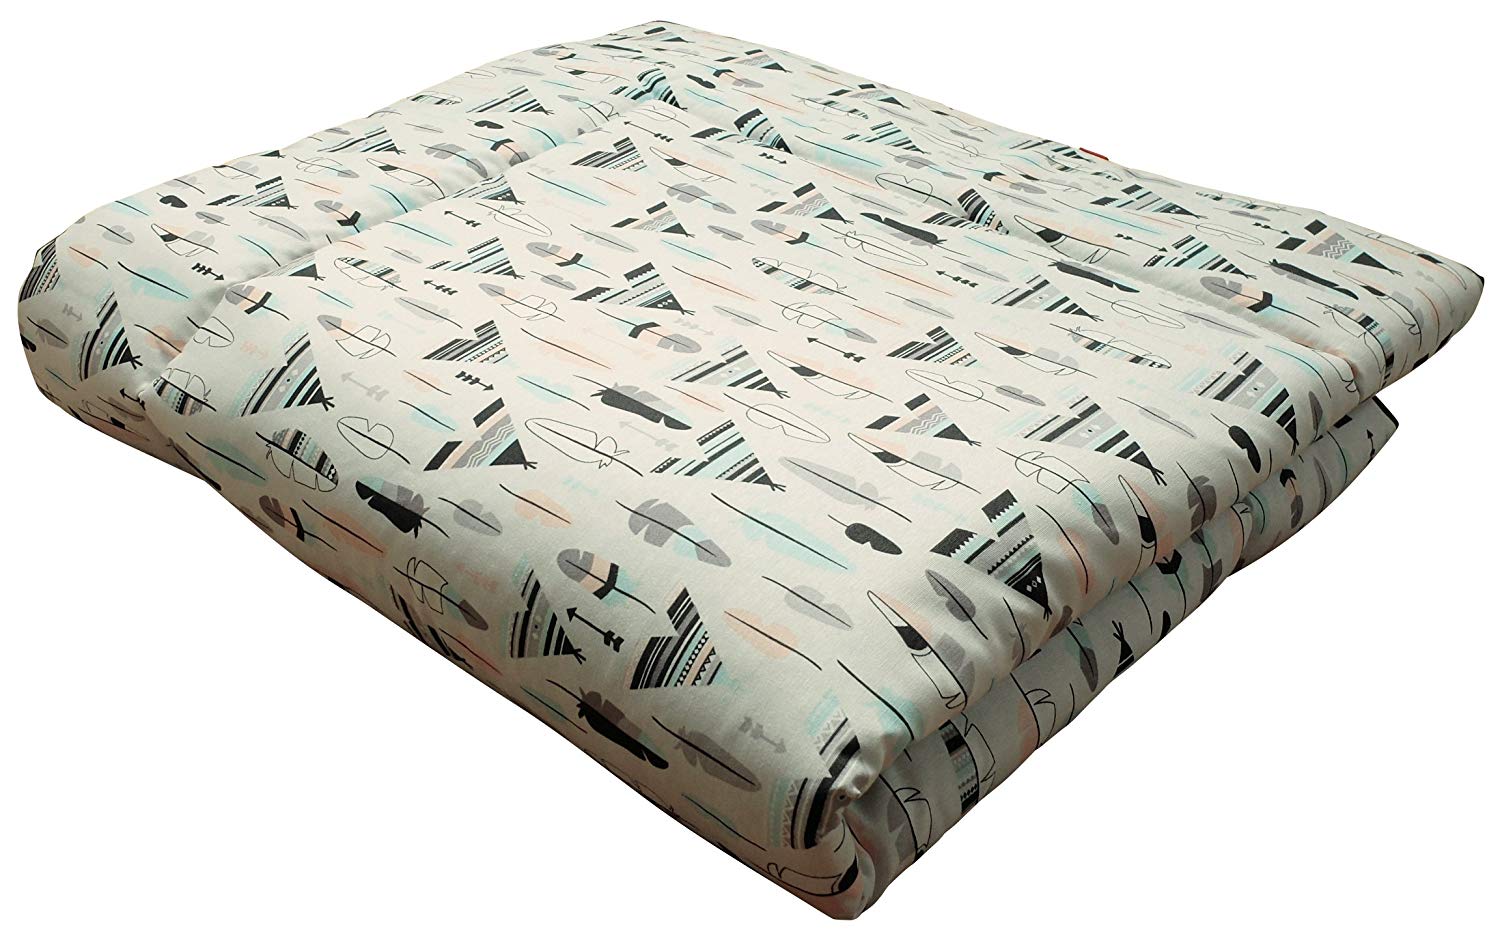 Ideenreich 2386 Crawling Blanket King Playpen Mattress, 120 x 120 cm Multi-Coloured